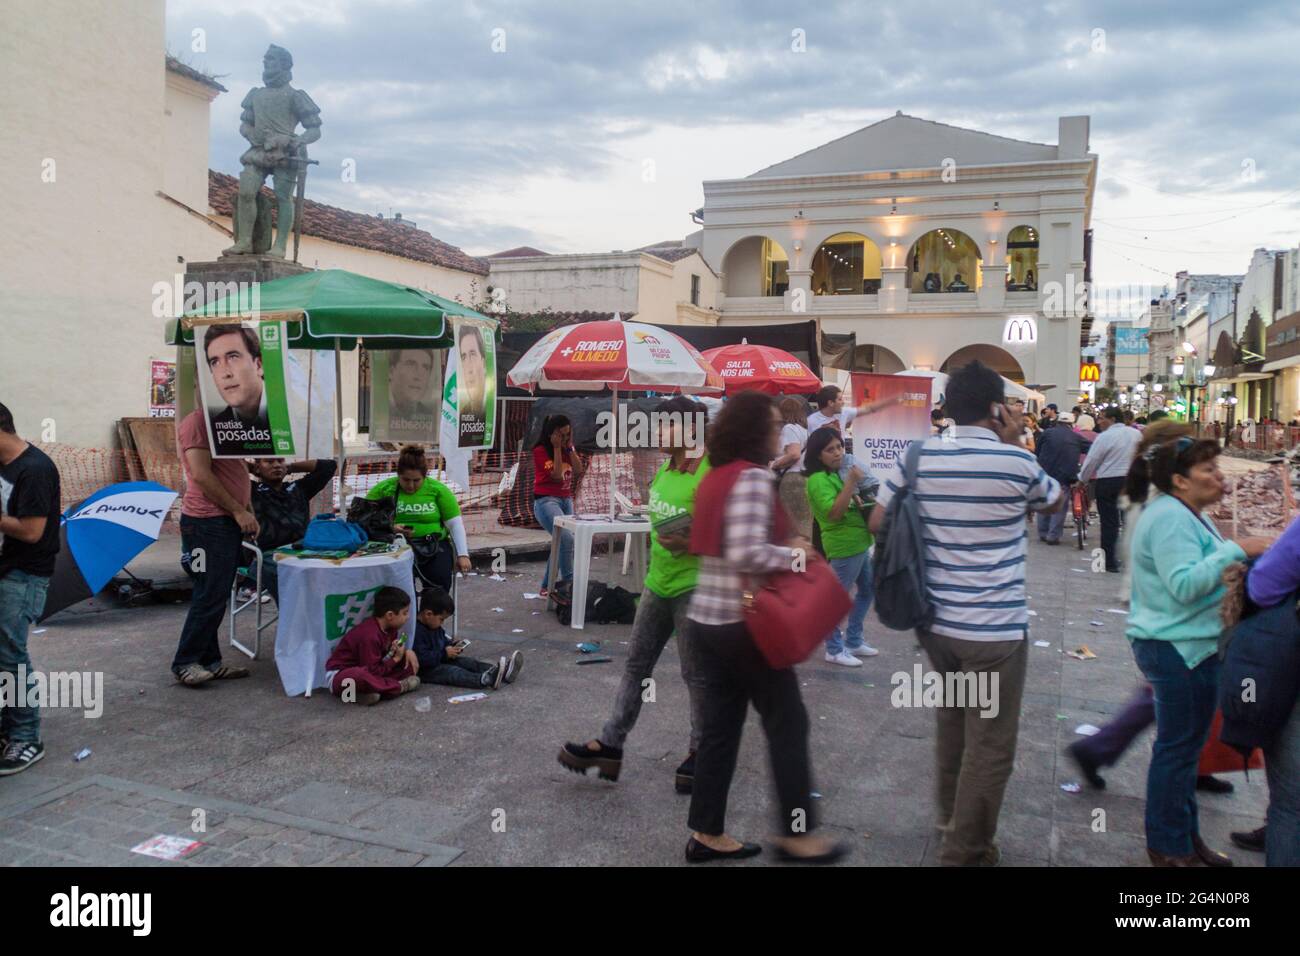 SALTA, ARGENTINA - APRIL 8, 2015: Political campaign in the city center of Salta, Argentina. Stock Photo